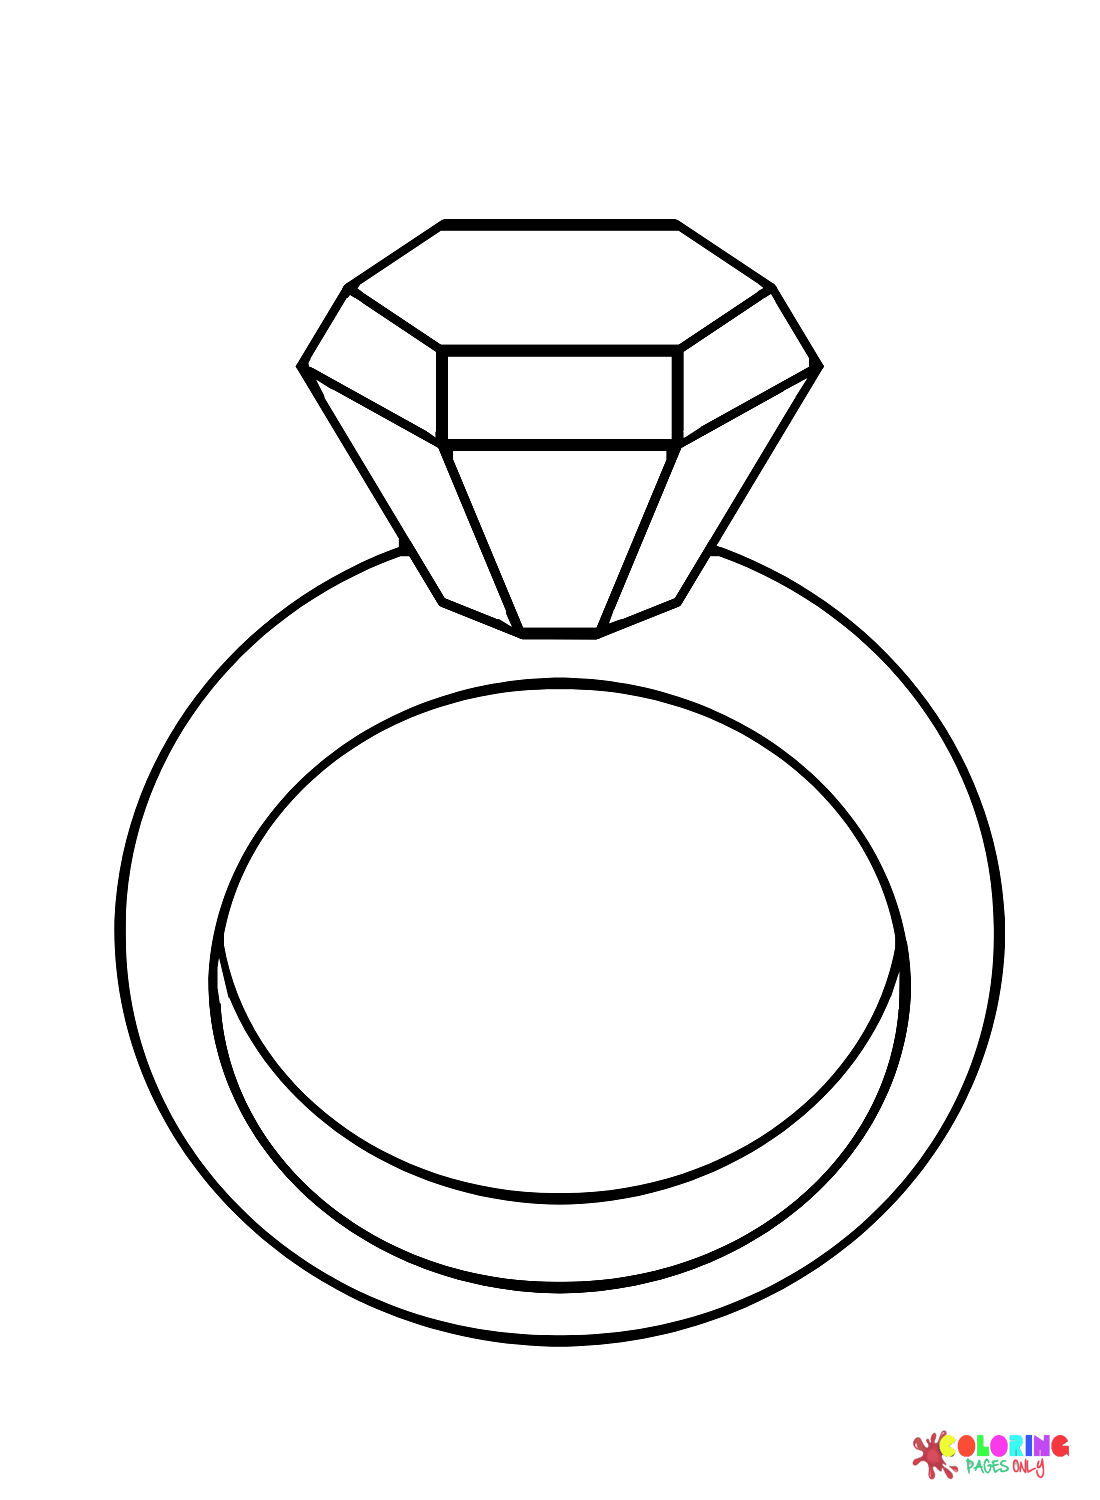 Diamond Wedding Ring Coloring Page